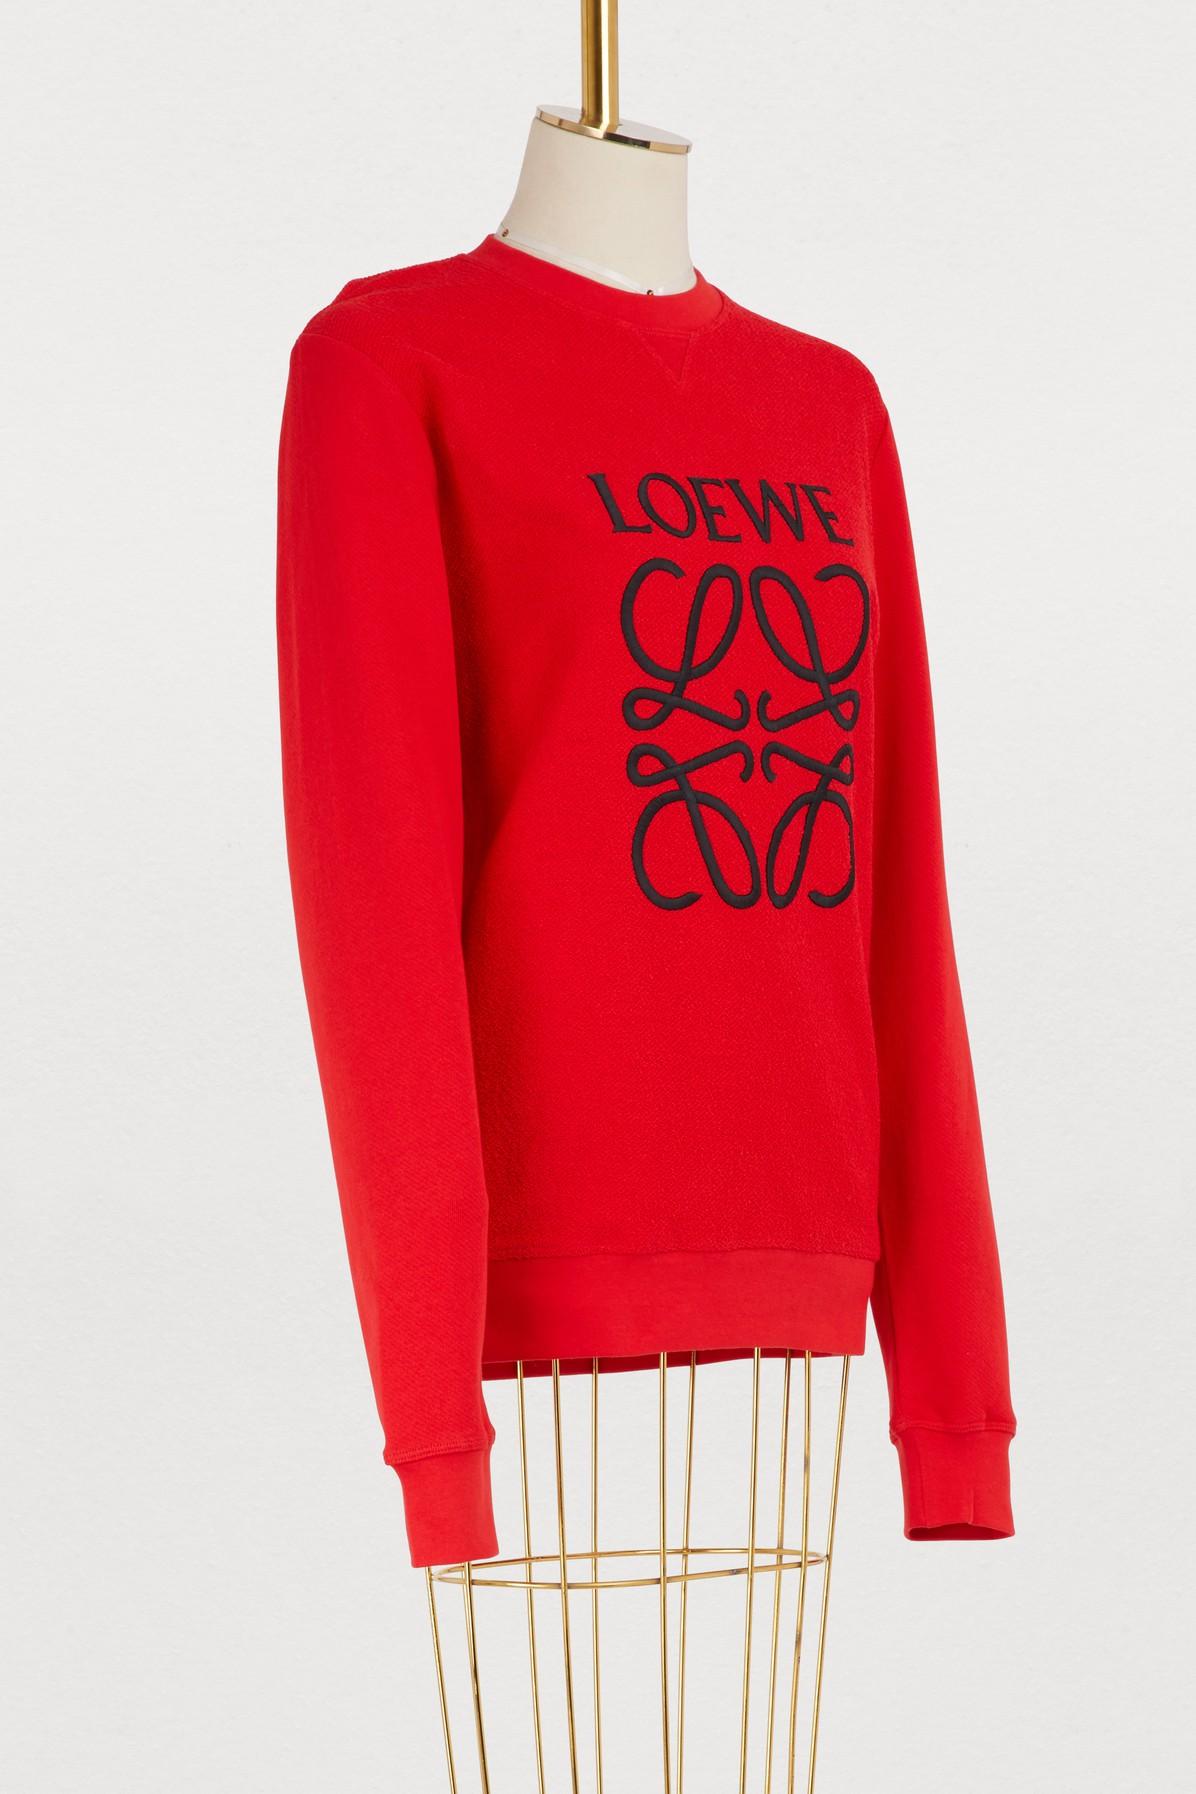 Loewe Cotton Anagram Sweatshirt in Red - Lyst